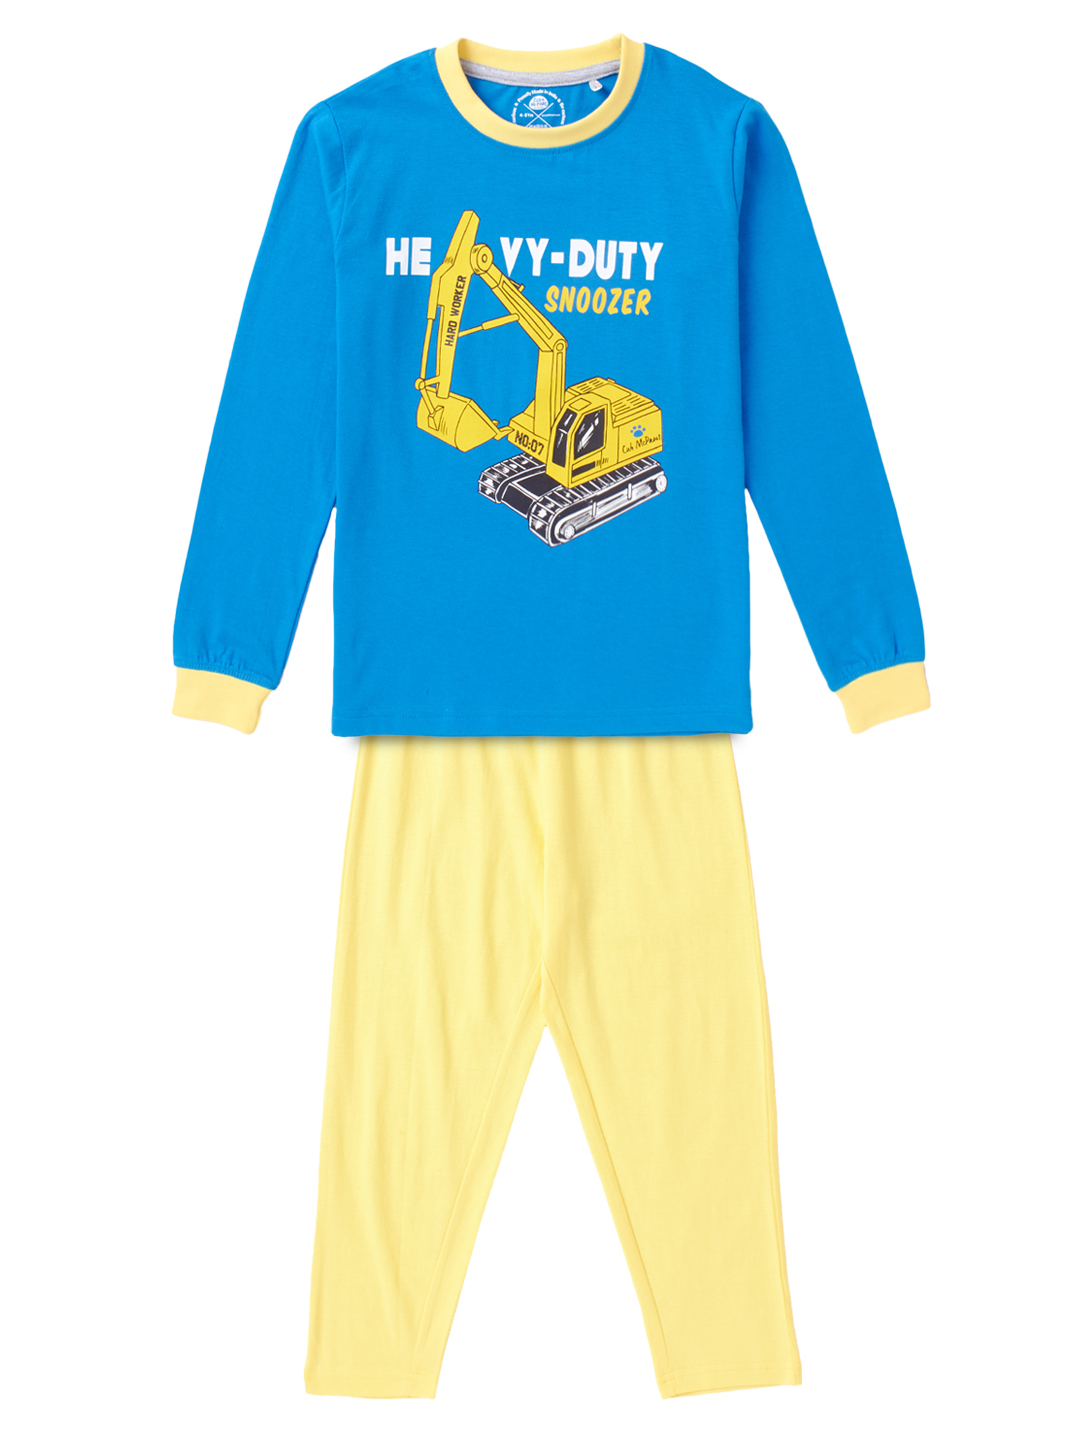 Boys Sleepwear Set - Blue & Yellow